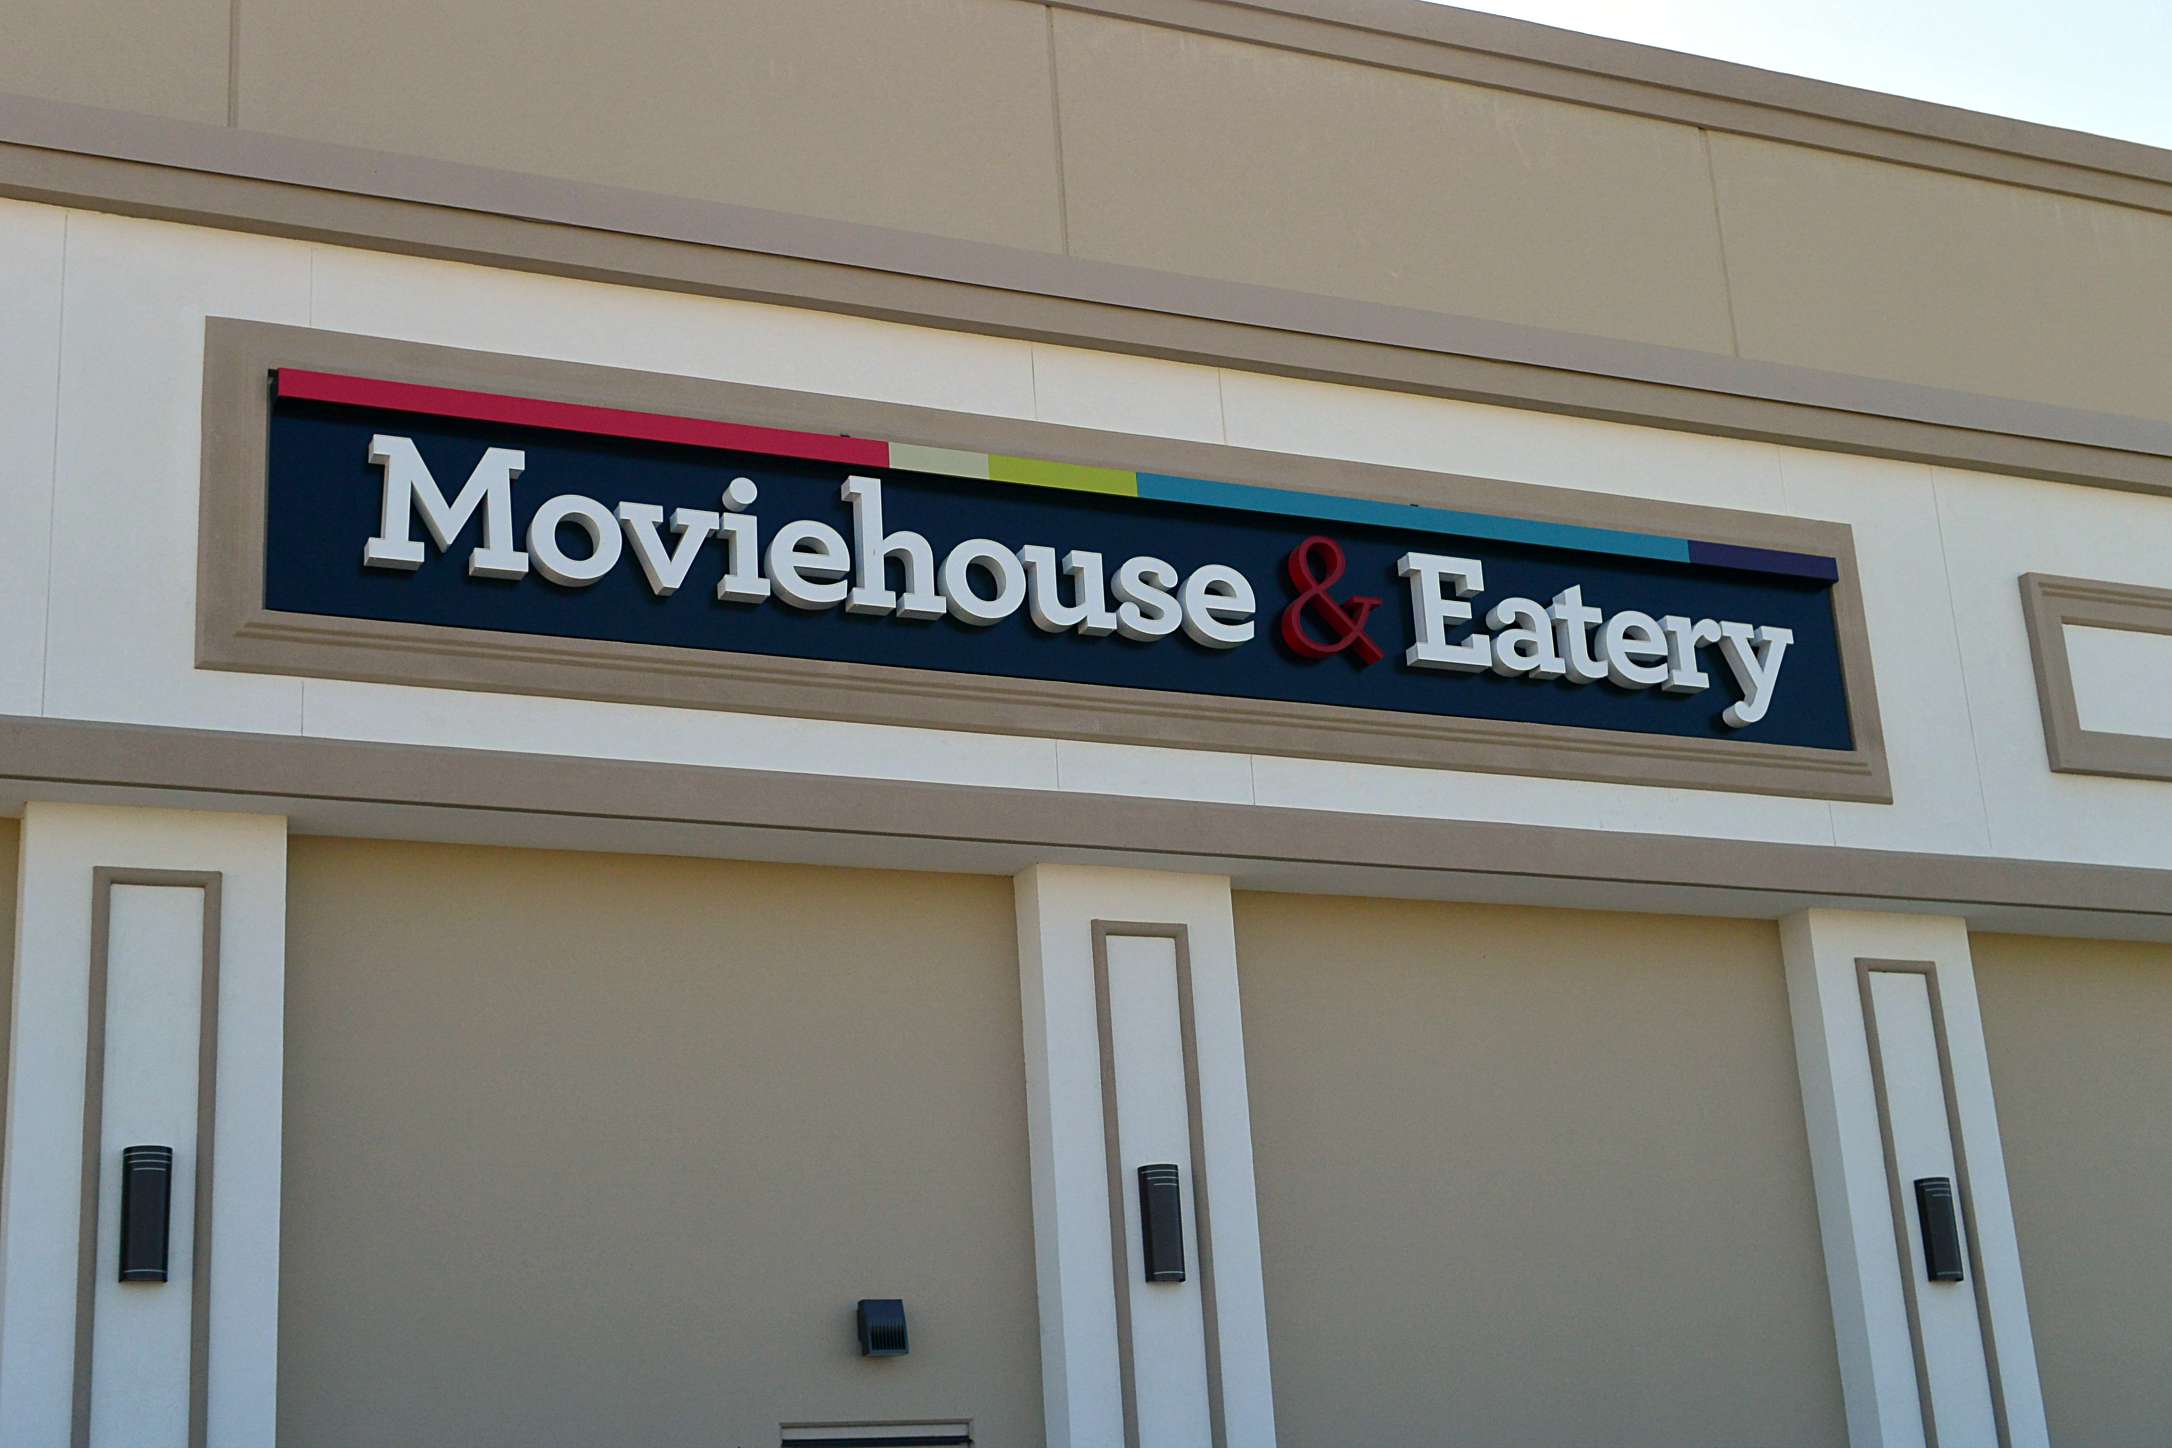 Moviehouse & Eatery Flower Mound